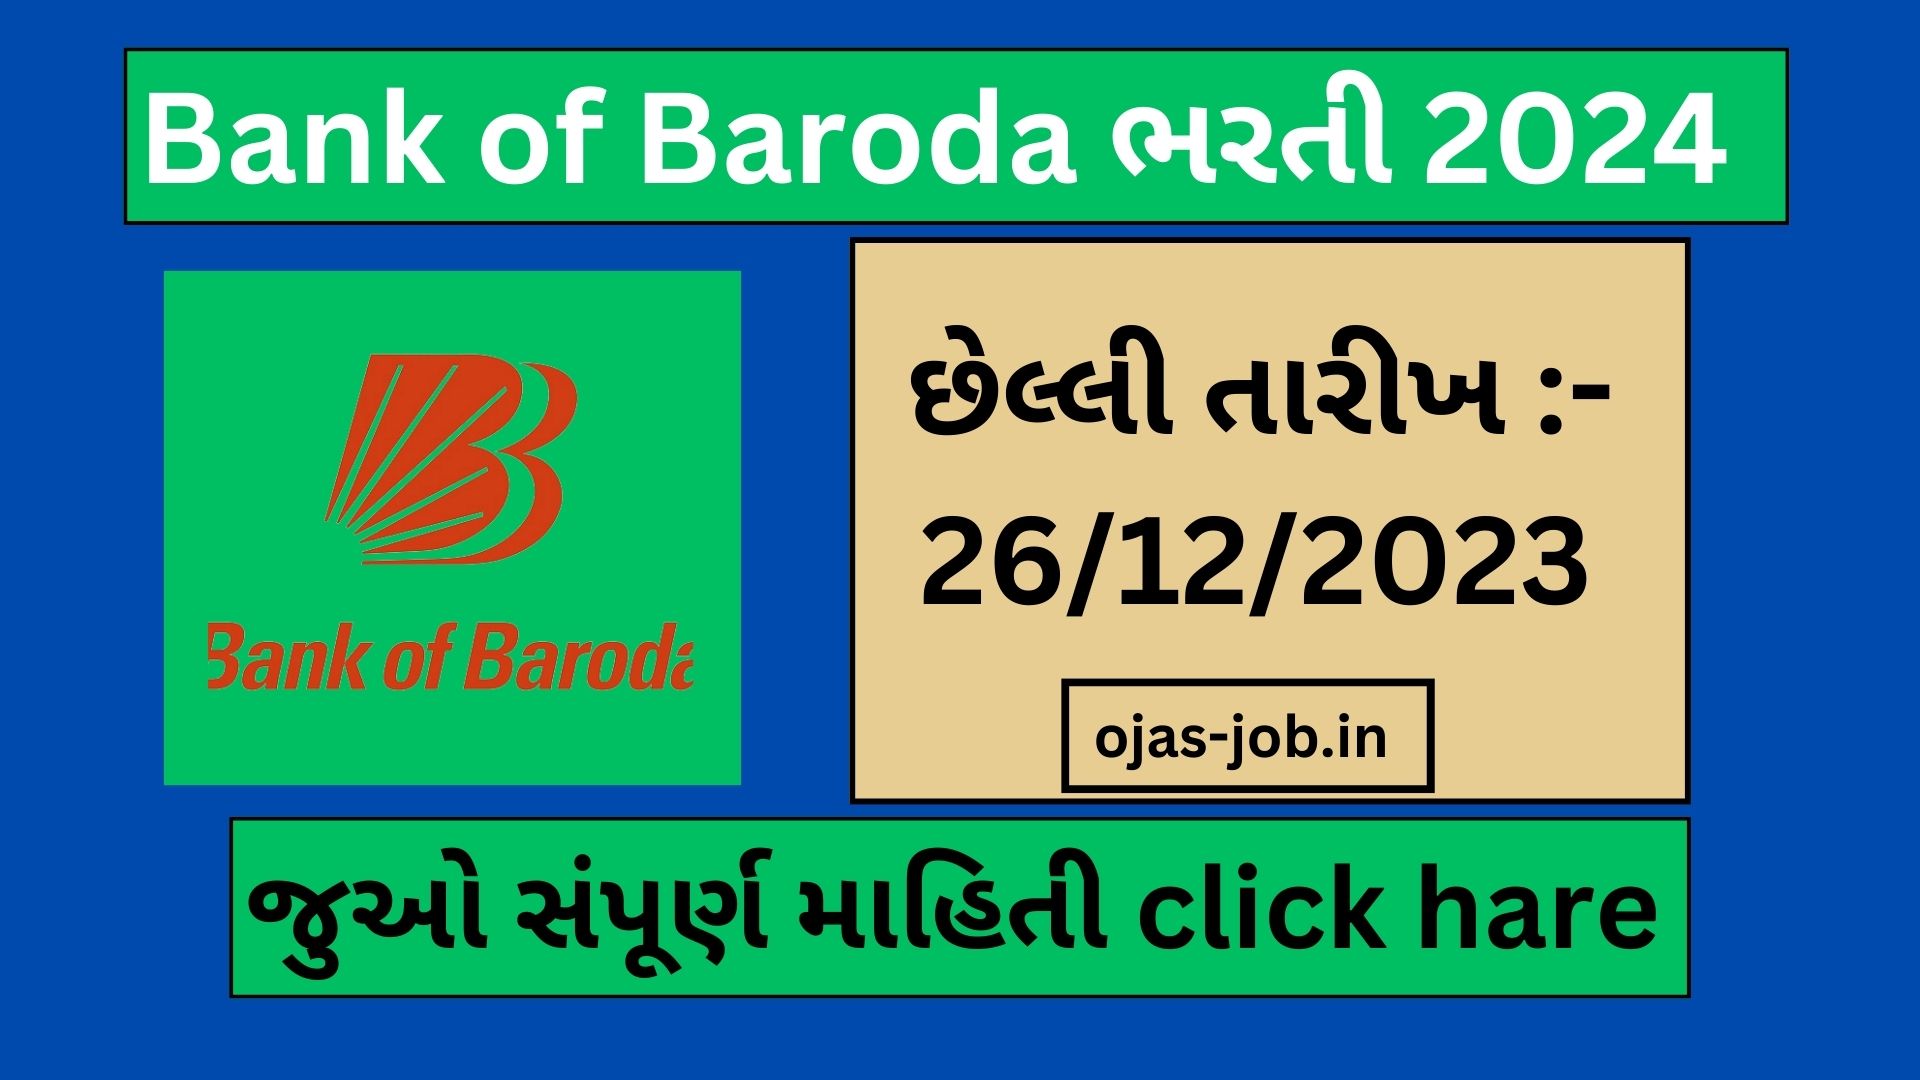 bank of Baroda recruitment 2023 for freshers